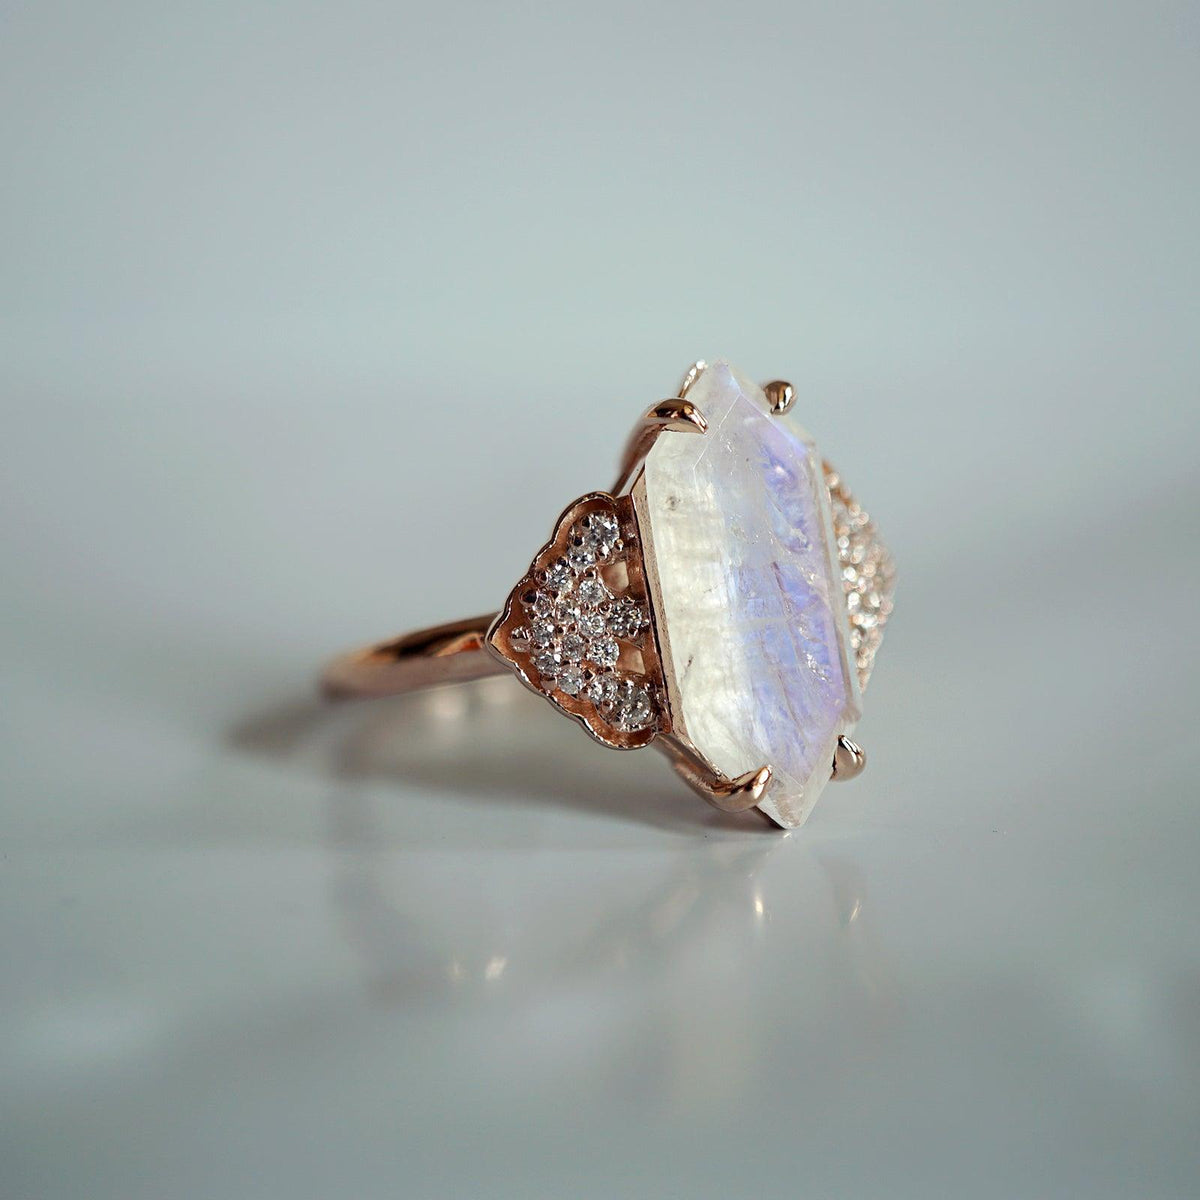 Frozen Moonstone Diamond Ring in 14K and 18K Gold